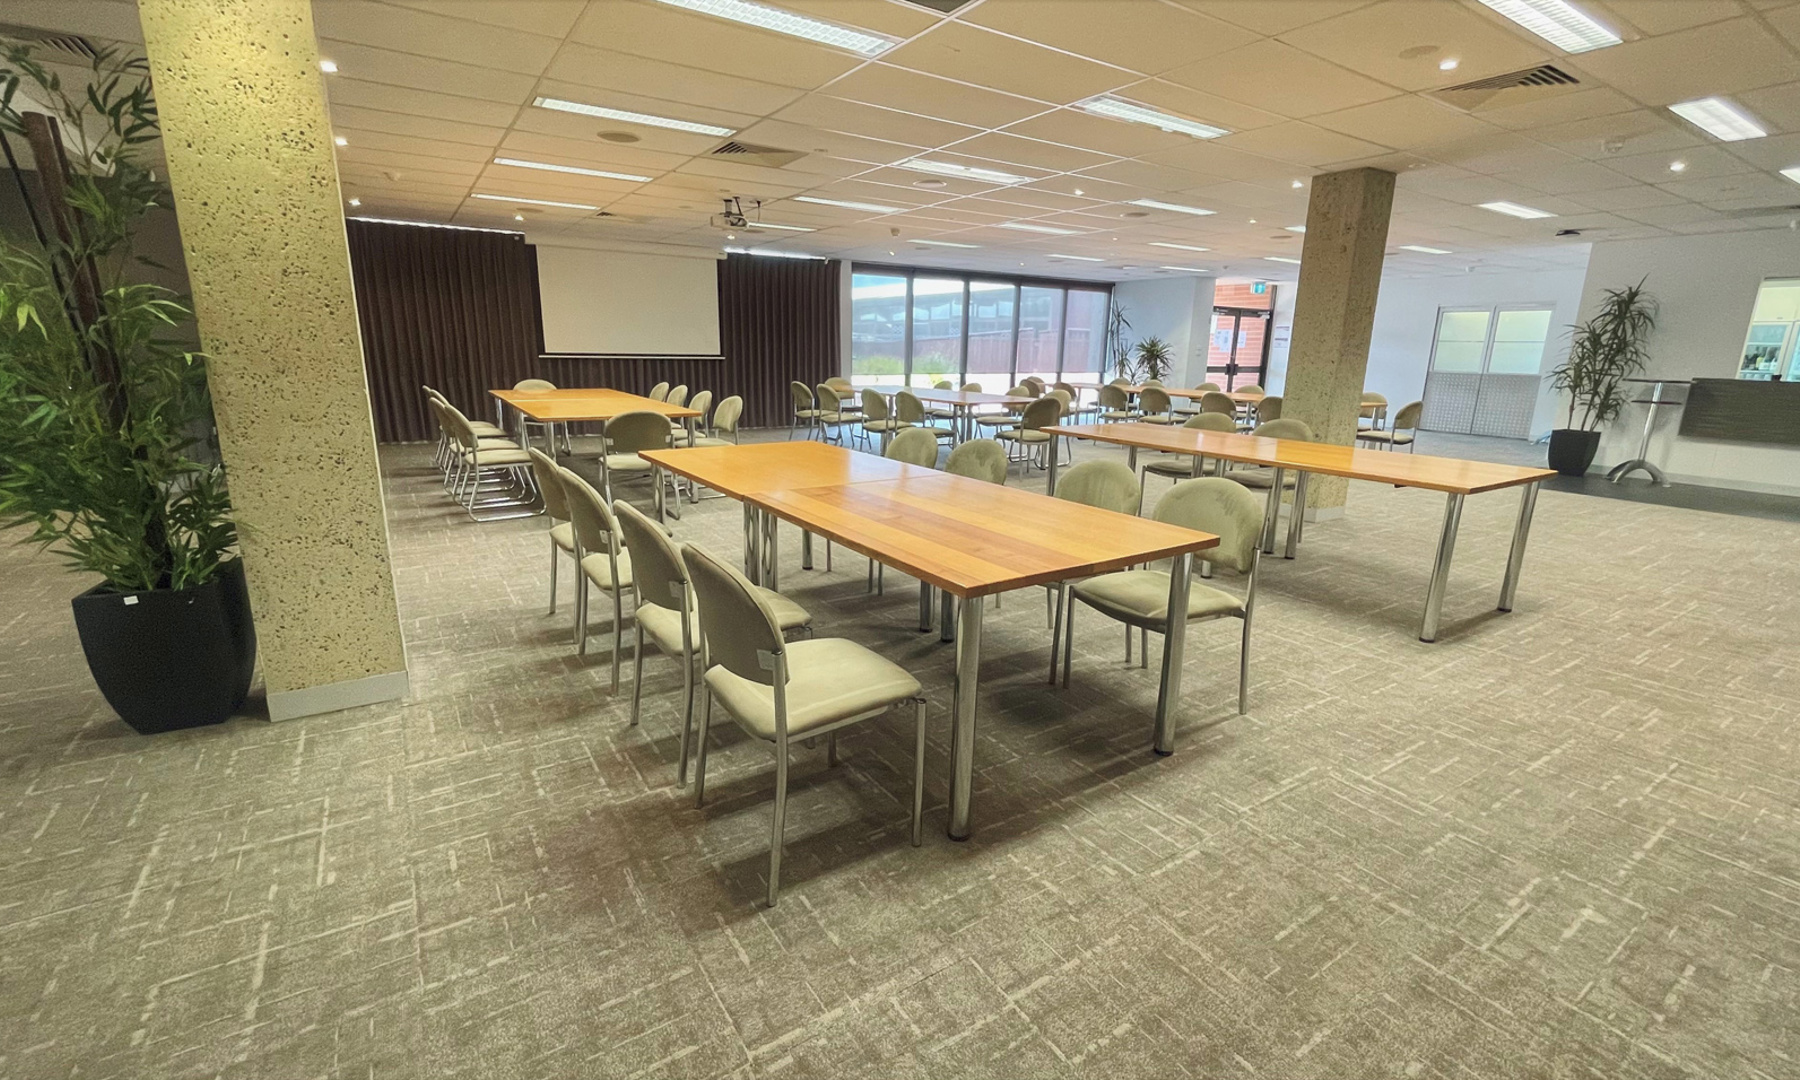 Conference Centre Ellen Smiddy Room tables